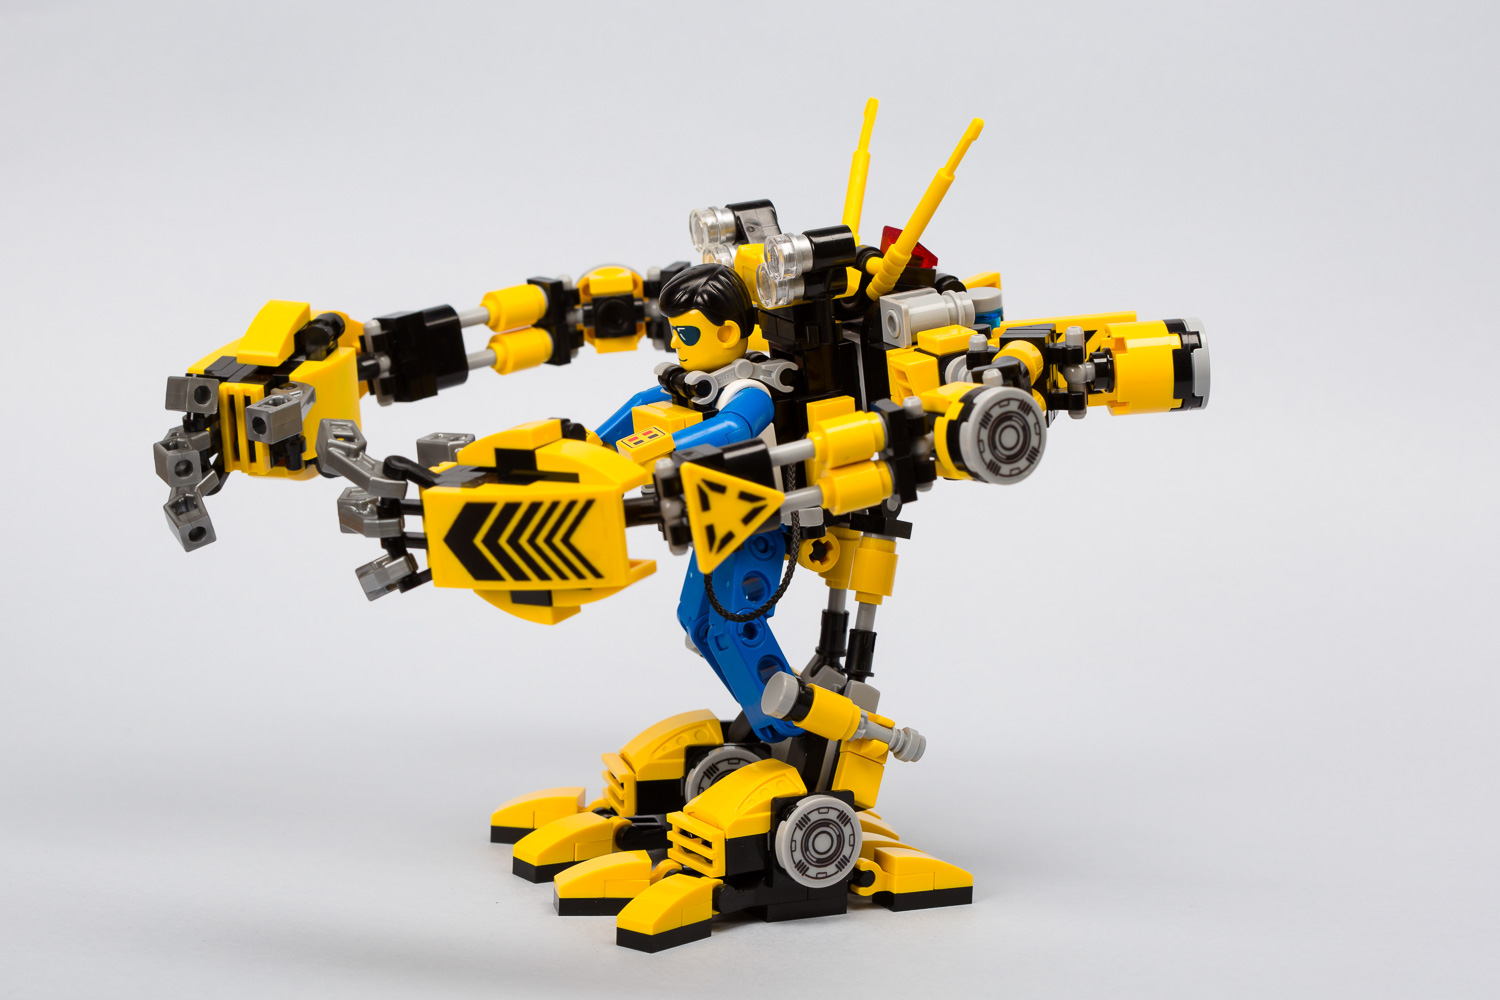 [MOC] Yellow Power Loader - LEGO Sci-Fi - Eurobricks Forums